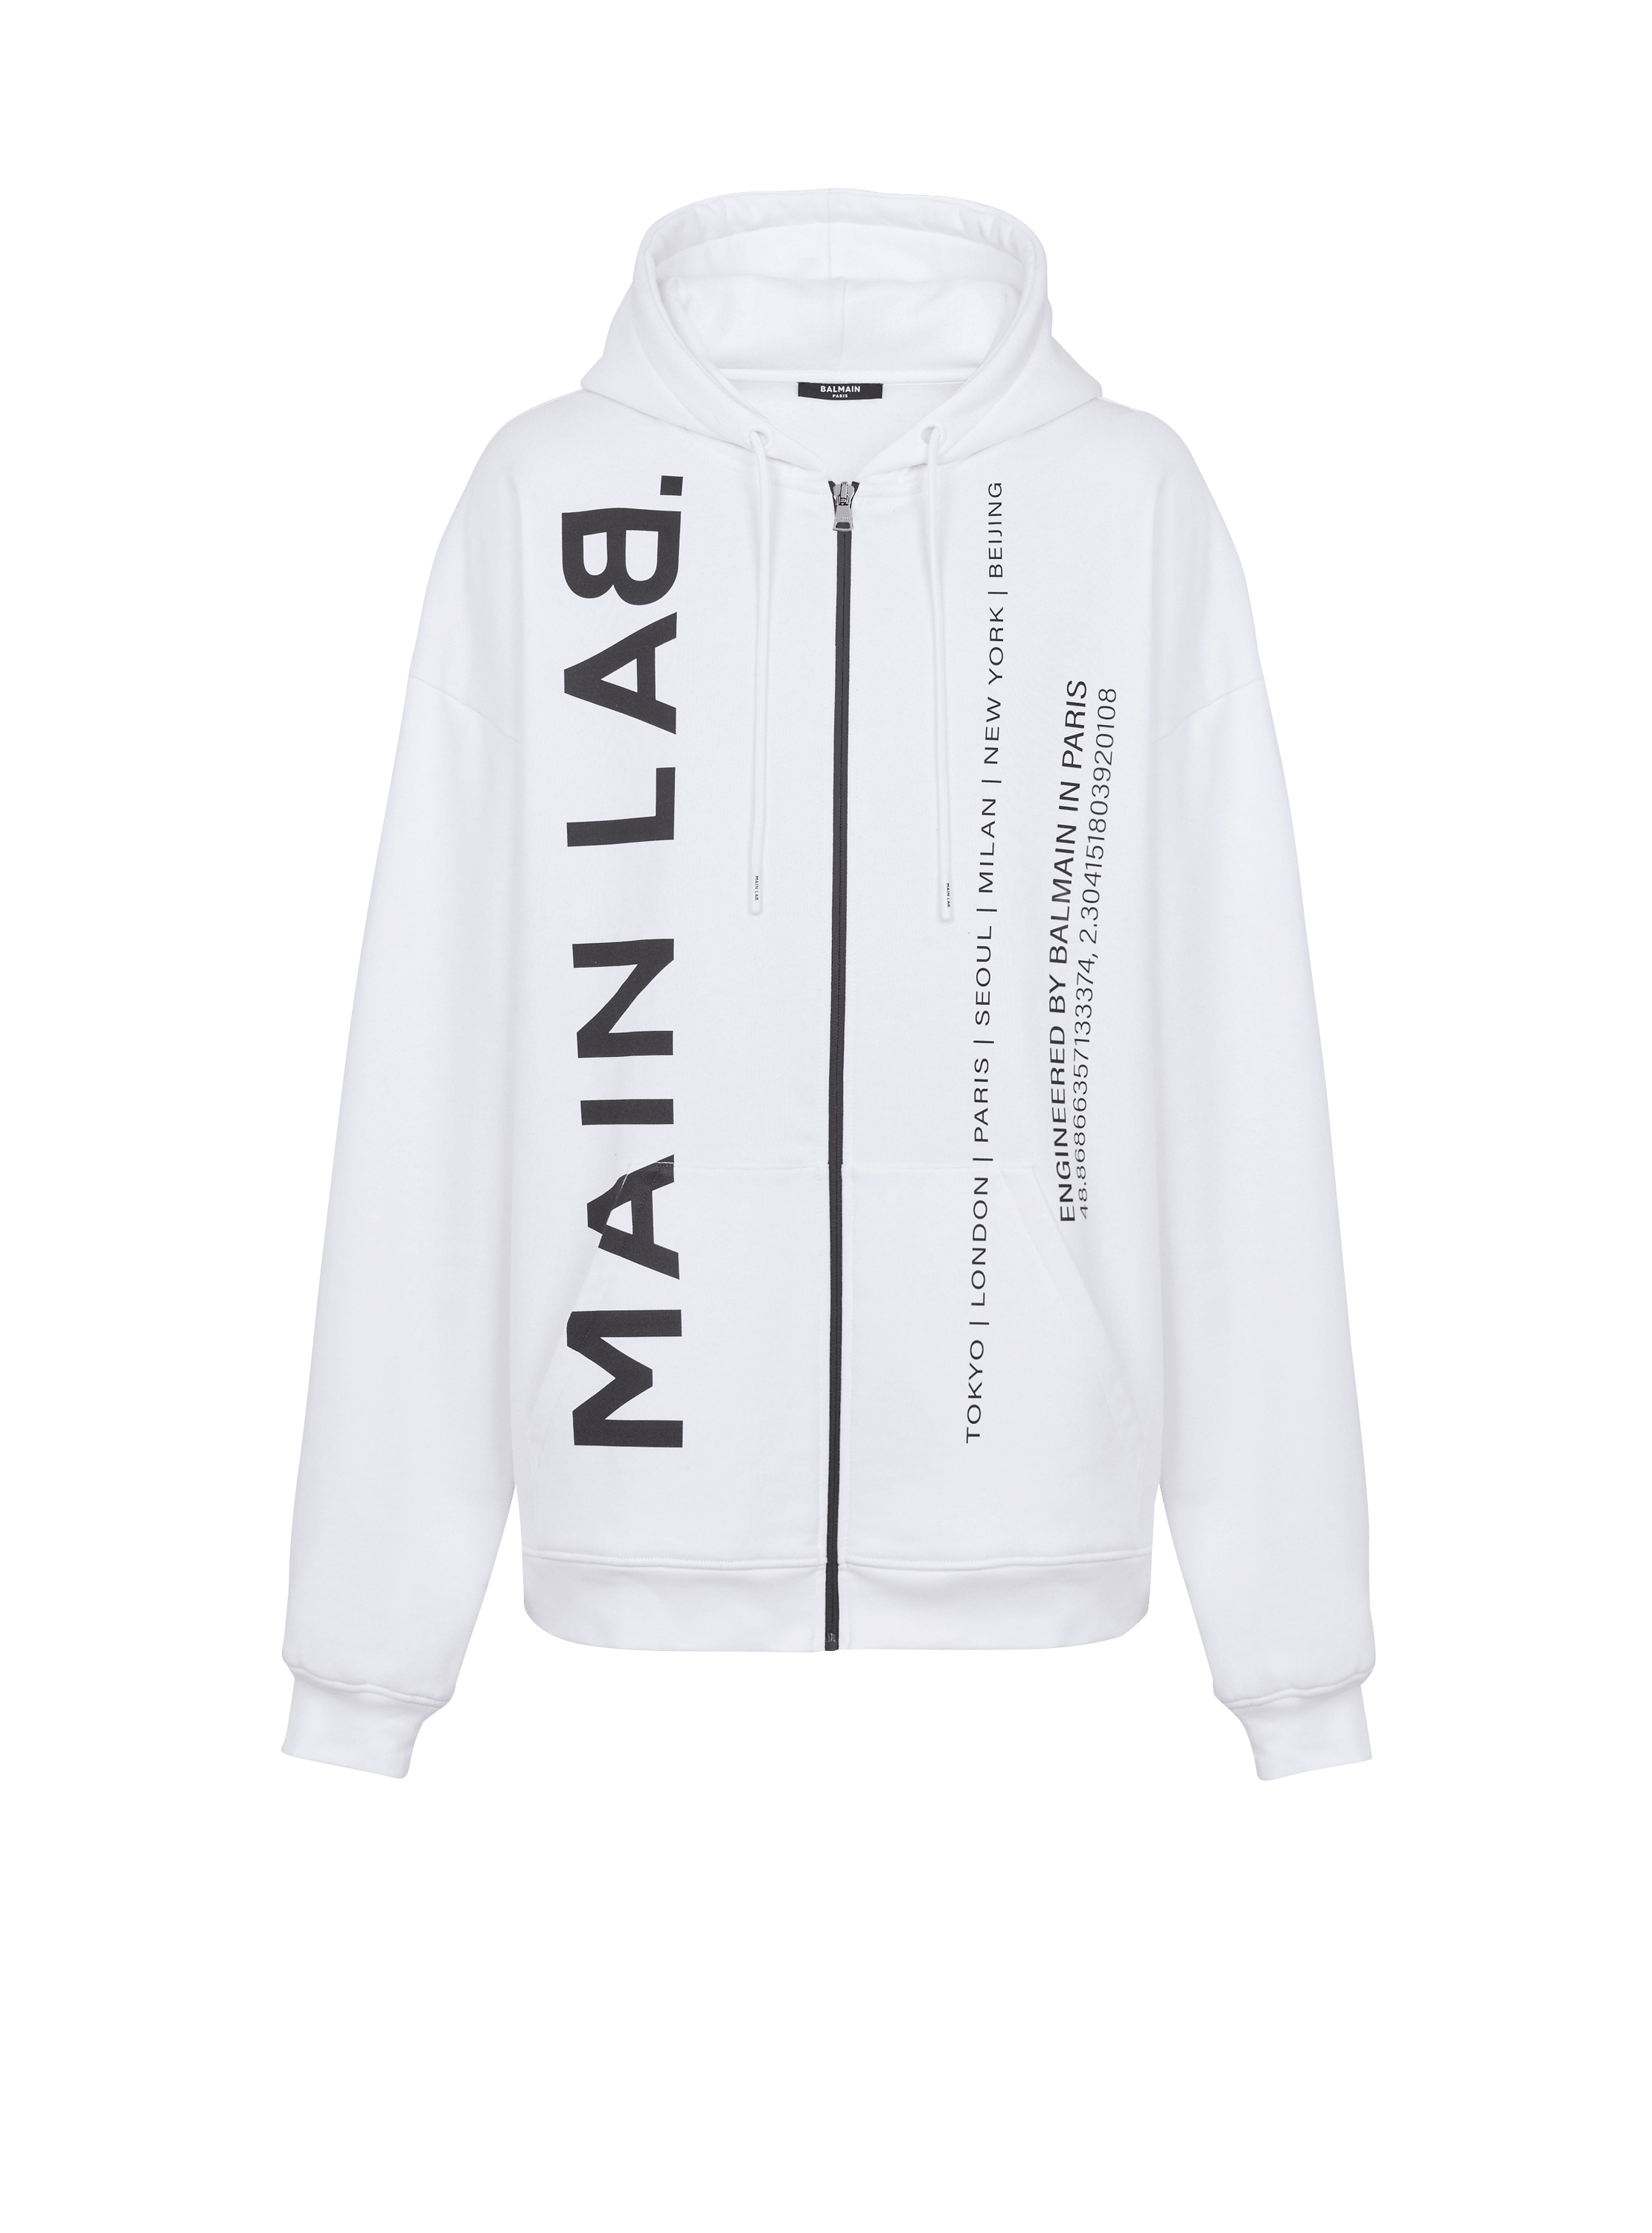 Main Lab zipped hoodie